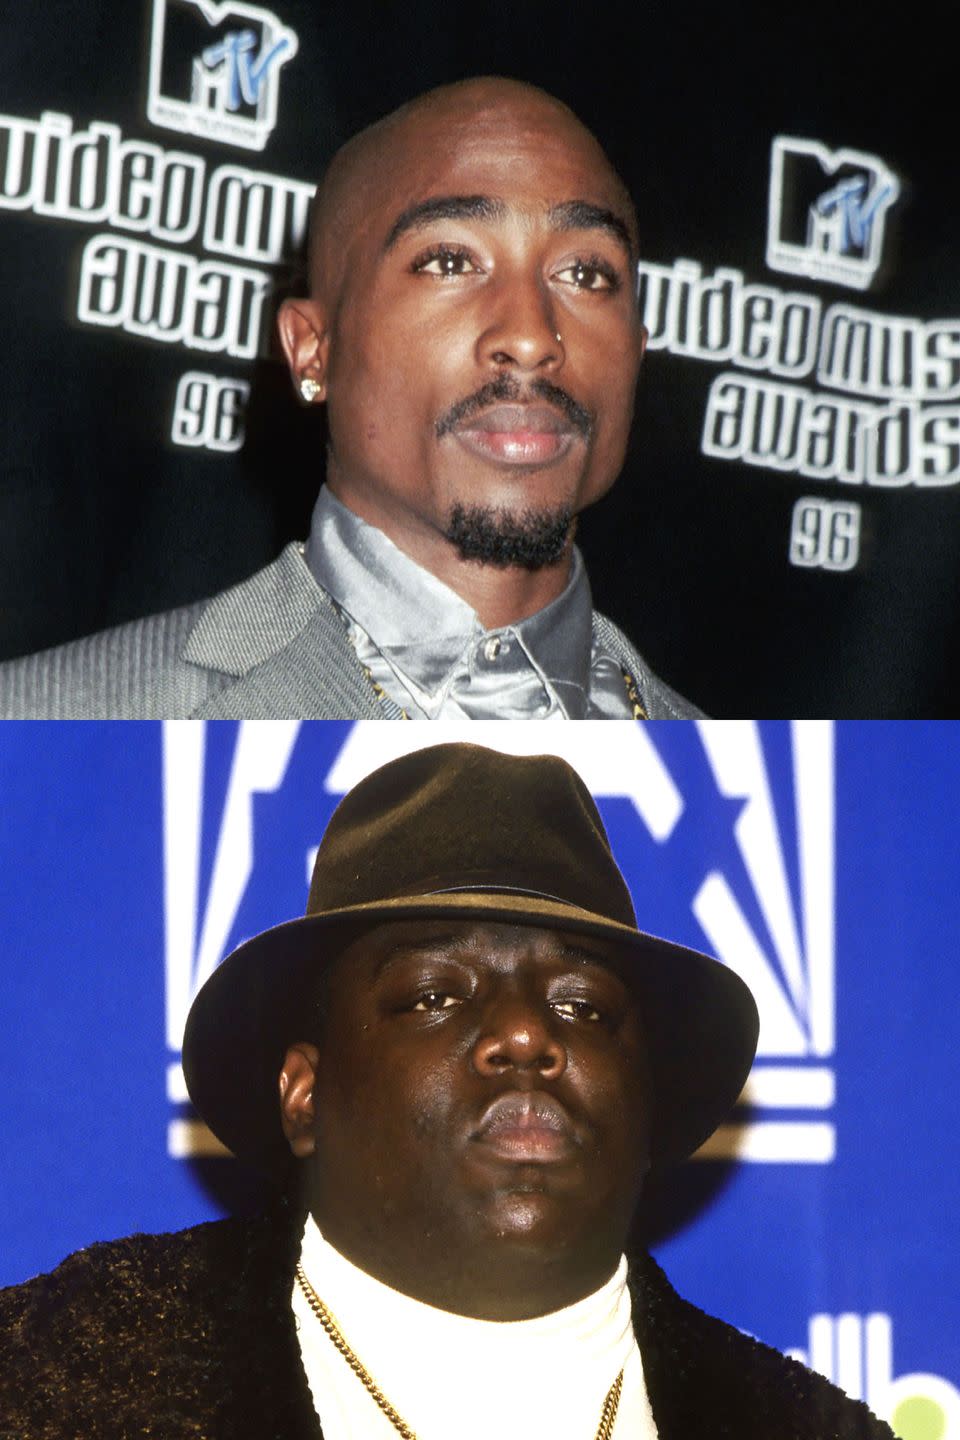 1996: Tupac vs. The Notorious B.I.G.